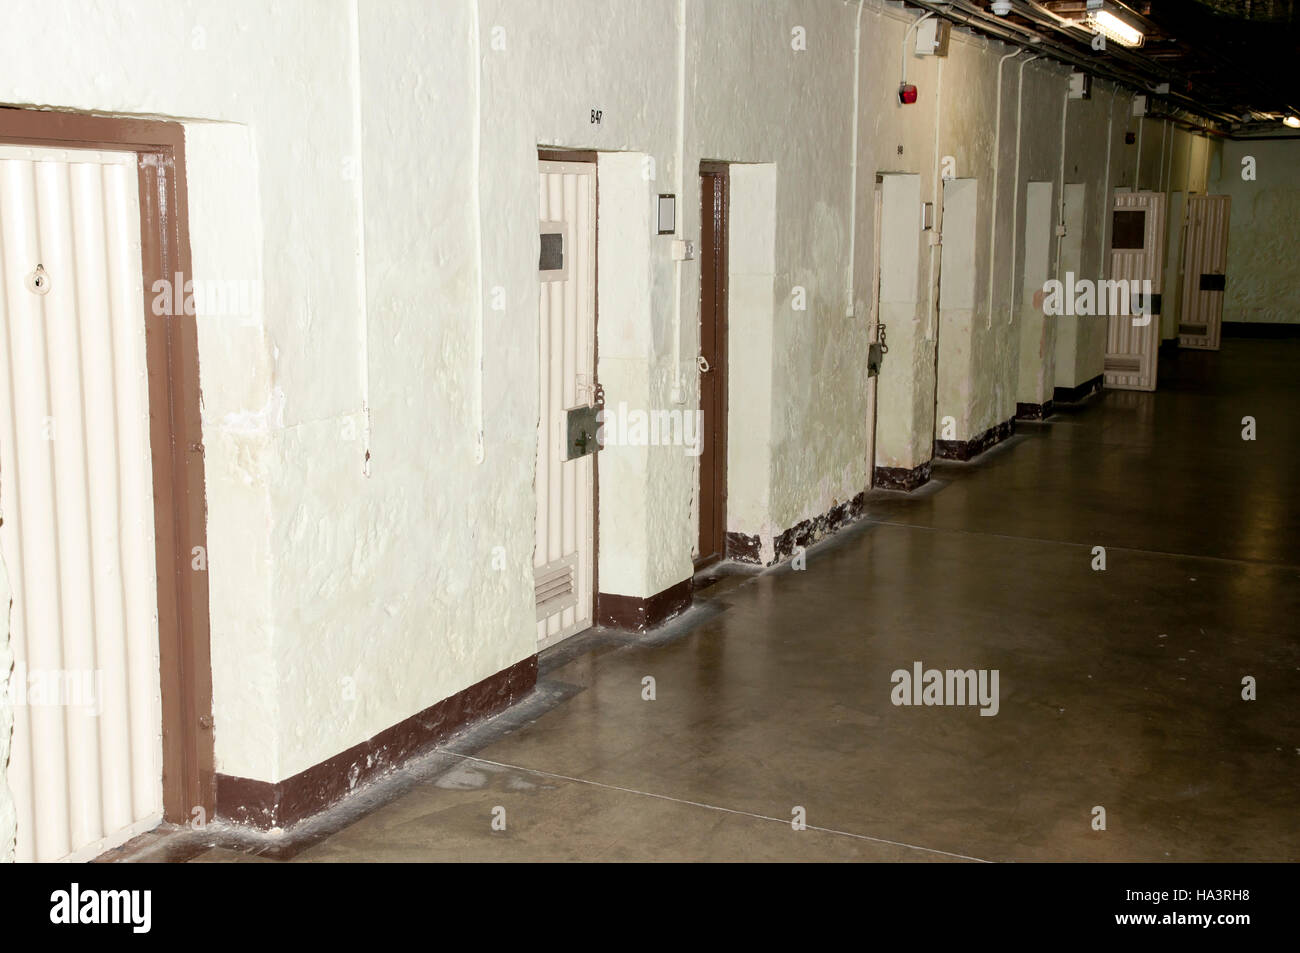 Fremantle alten Gefängnis Korridor - Australien Stockfoto